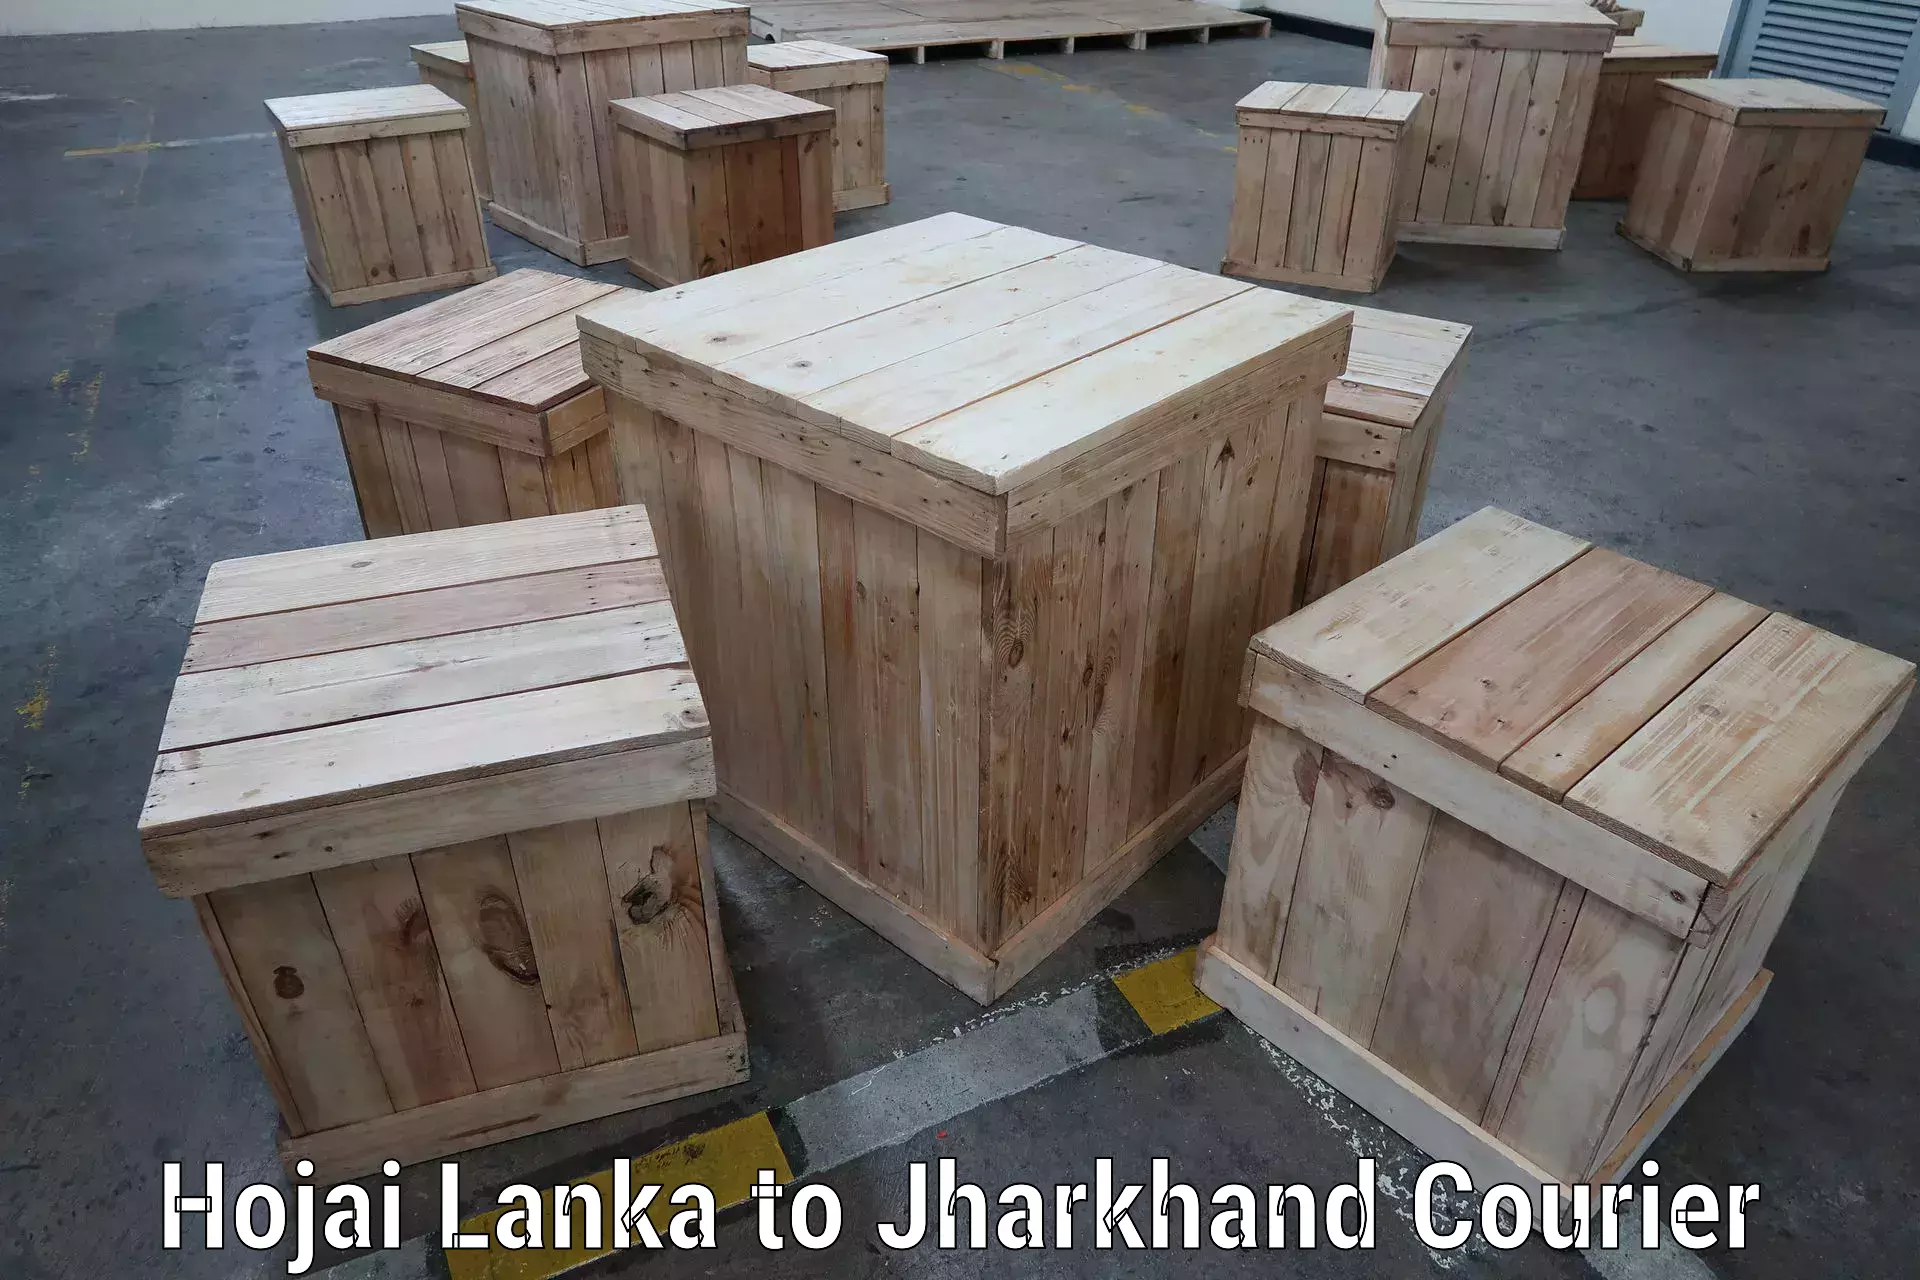 Doorstep parcel pickup Hojai Lanka to Peterbar